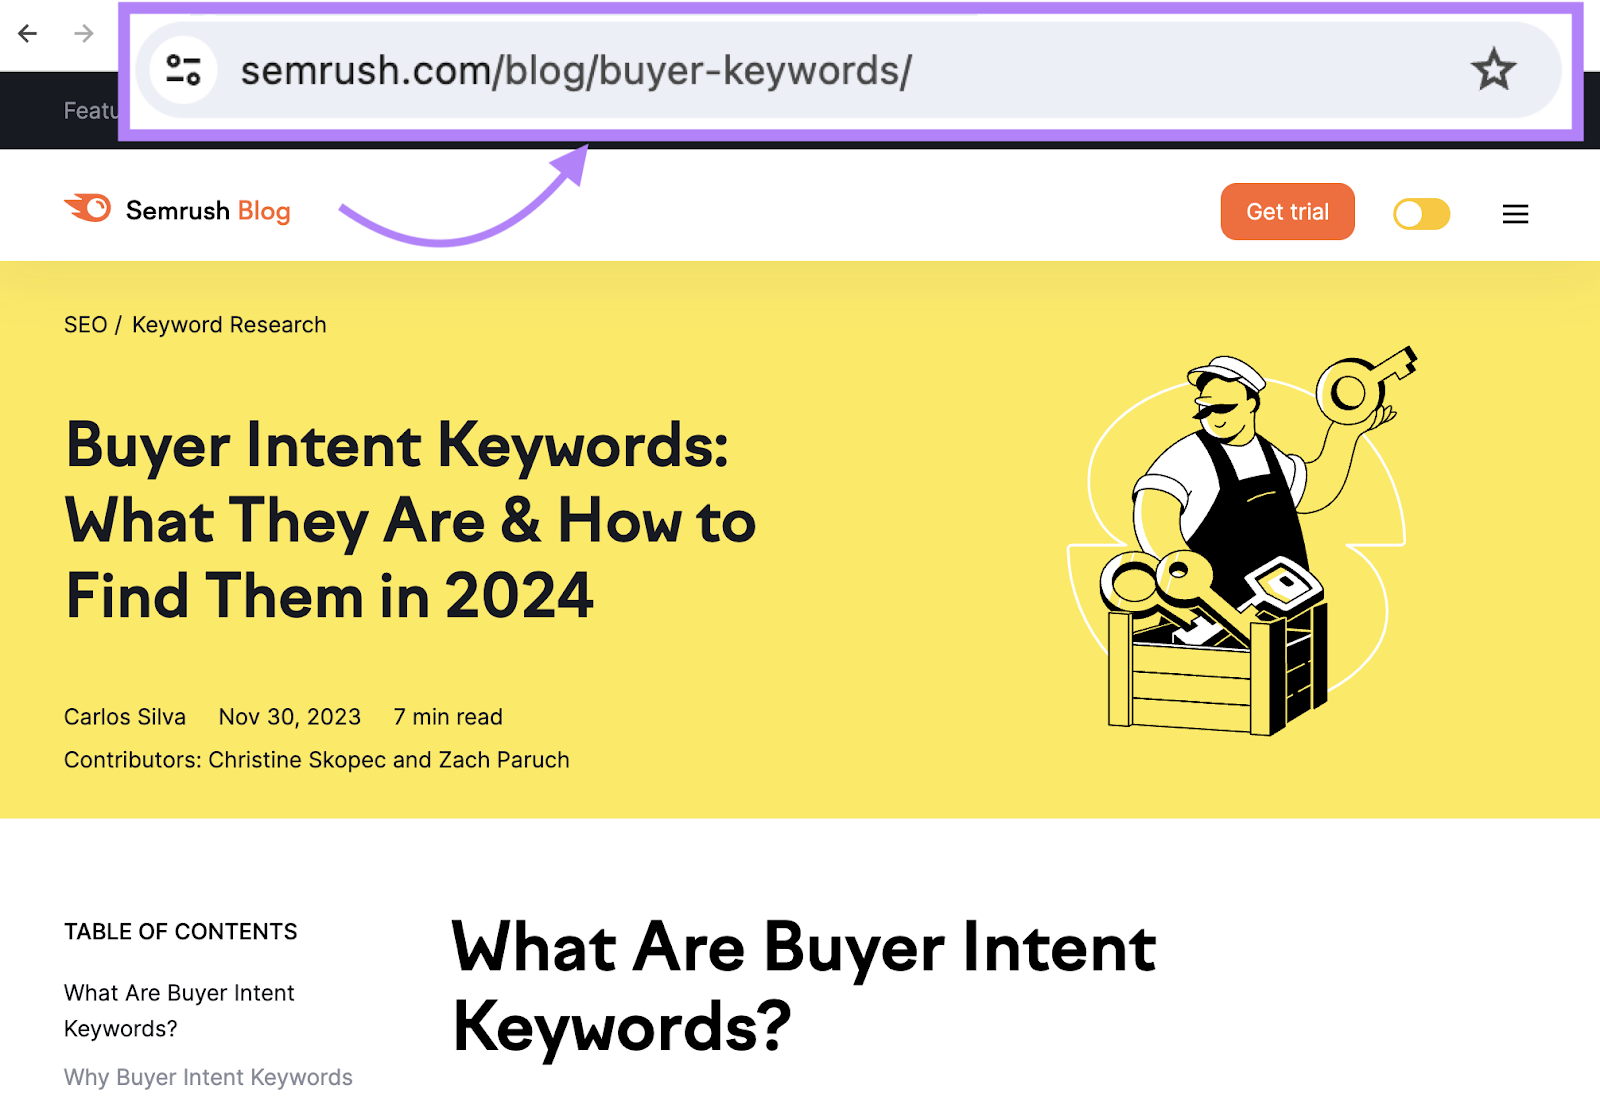 A URL bar with URL that reads "semrush.com/blog/buyer-keywords/"